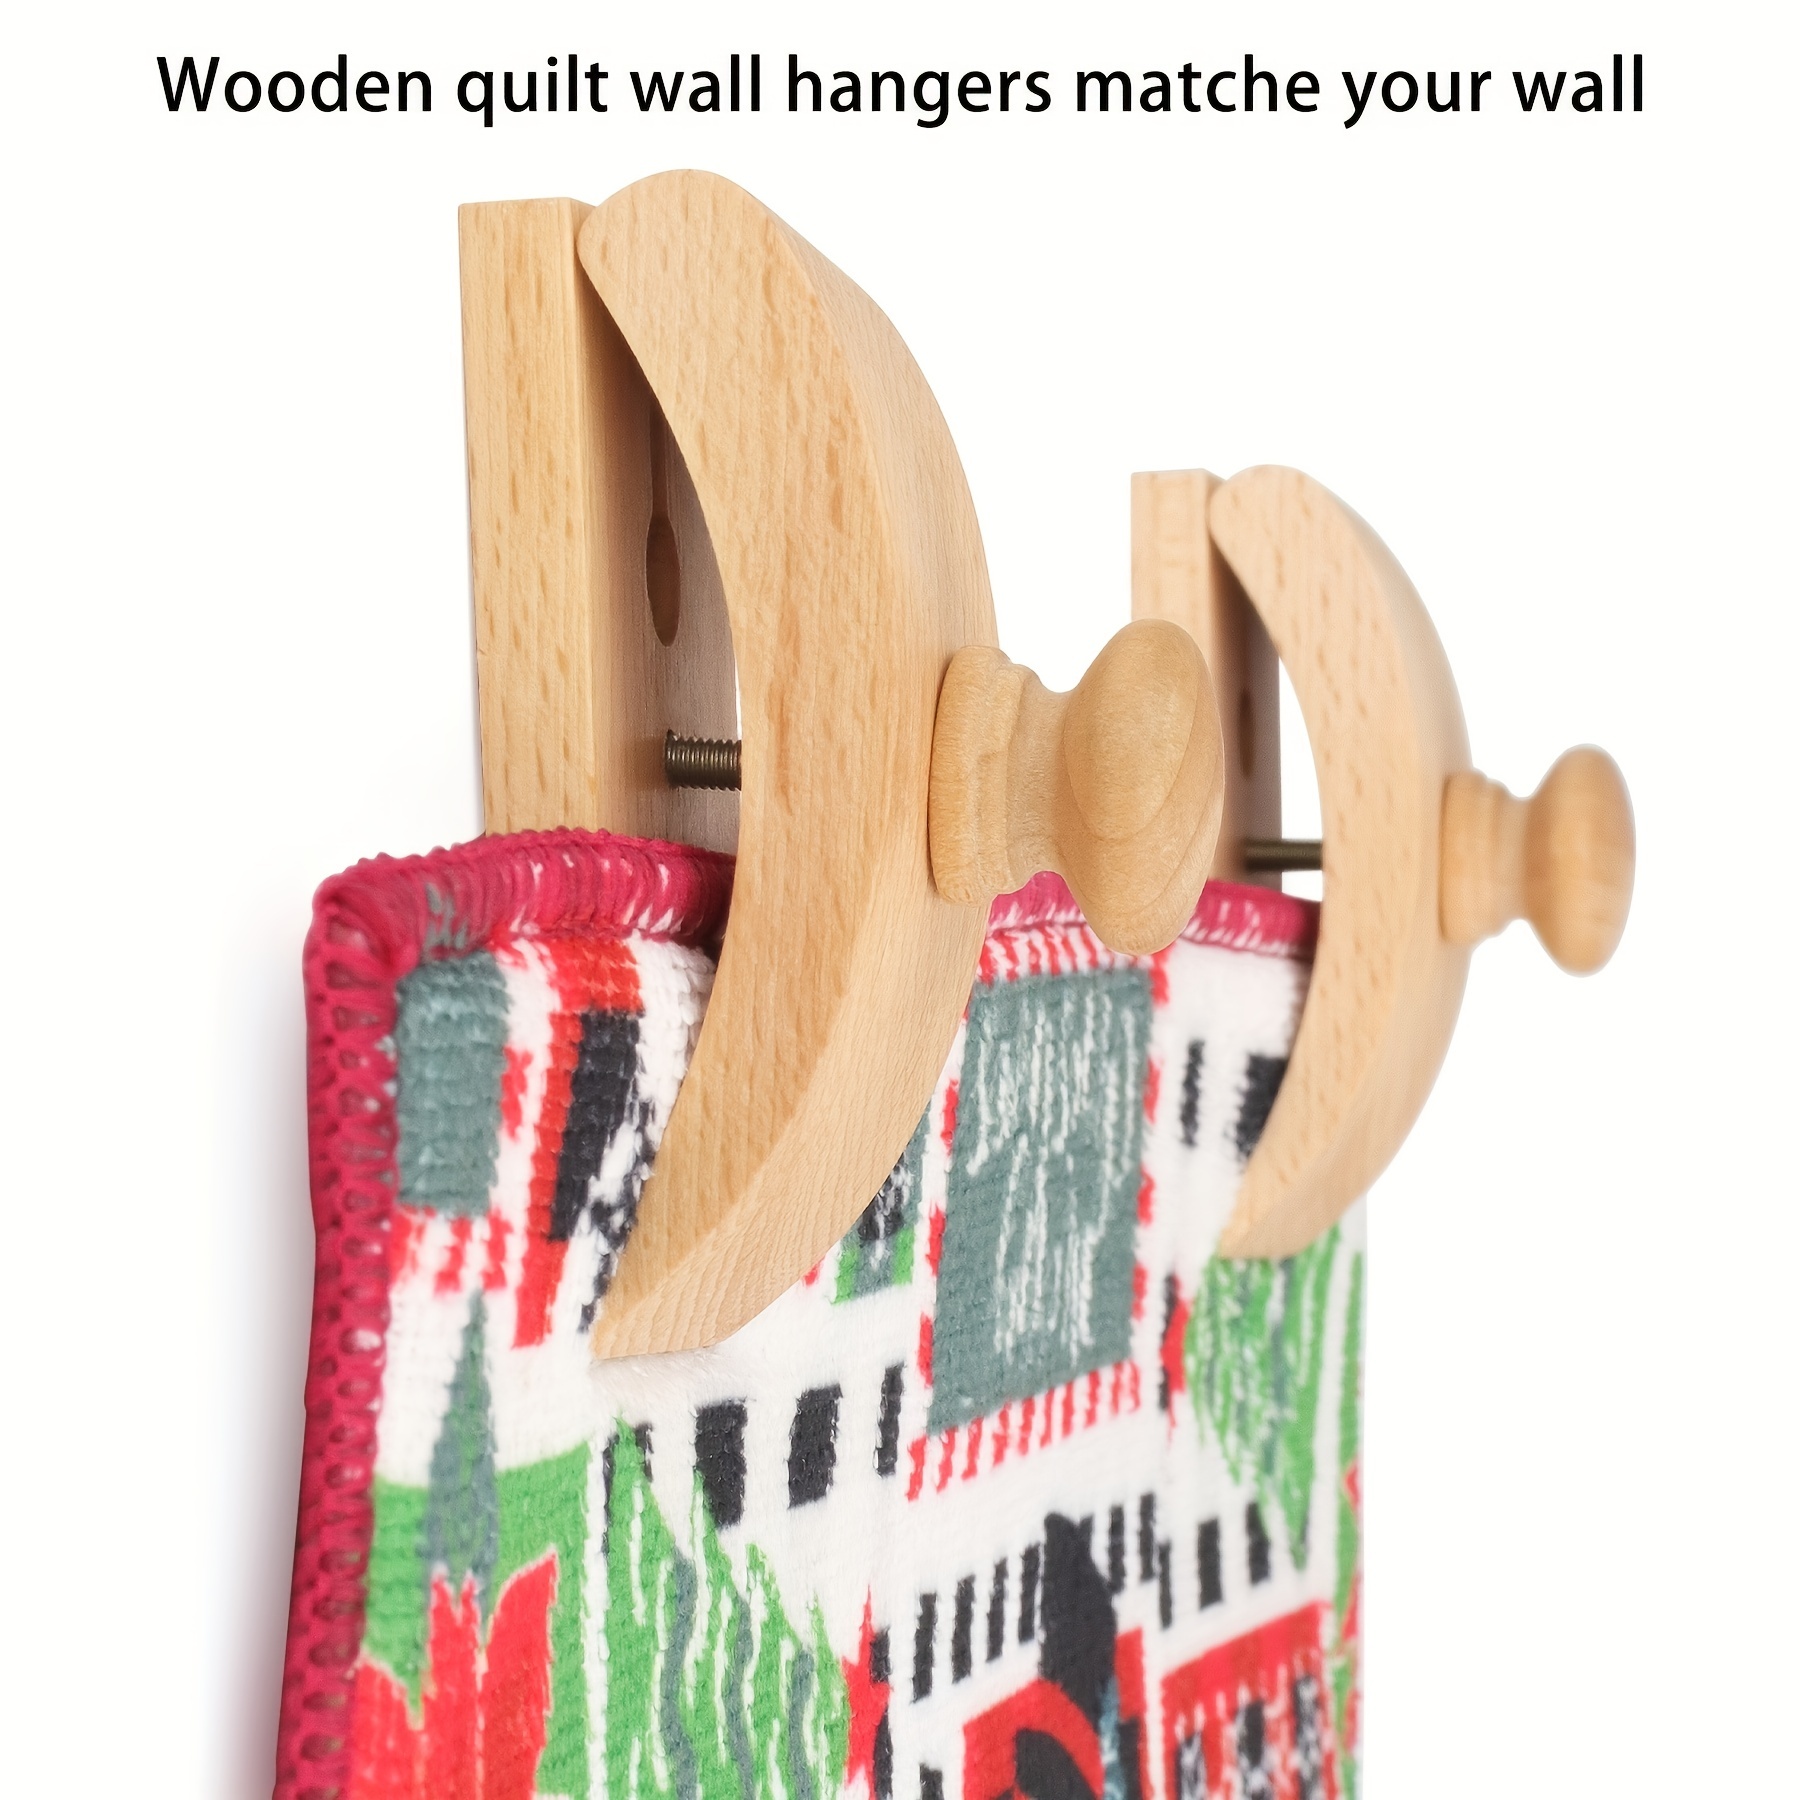 2 Quilt Hangers, Wall Hanging Hanger, Wooden Wall Hanger, Wooden